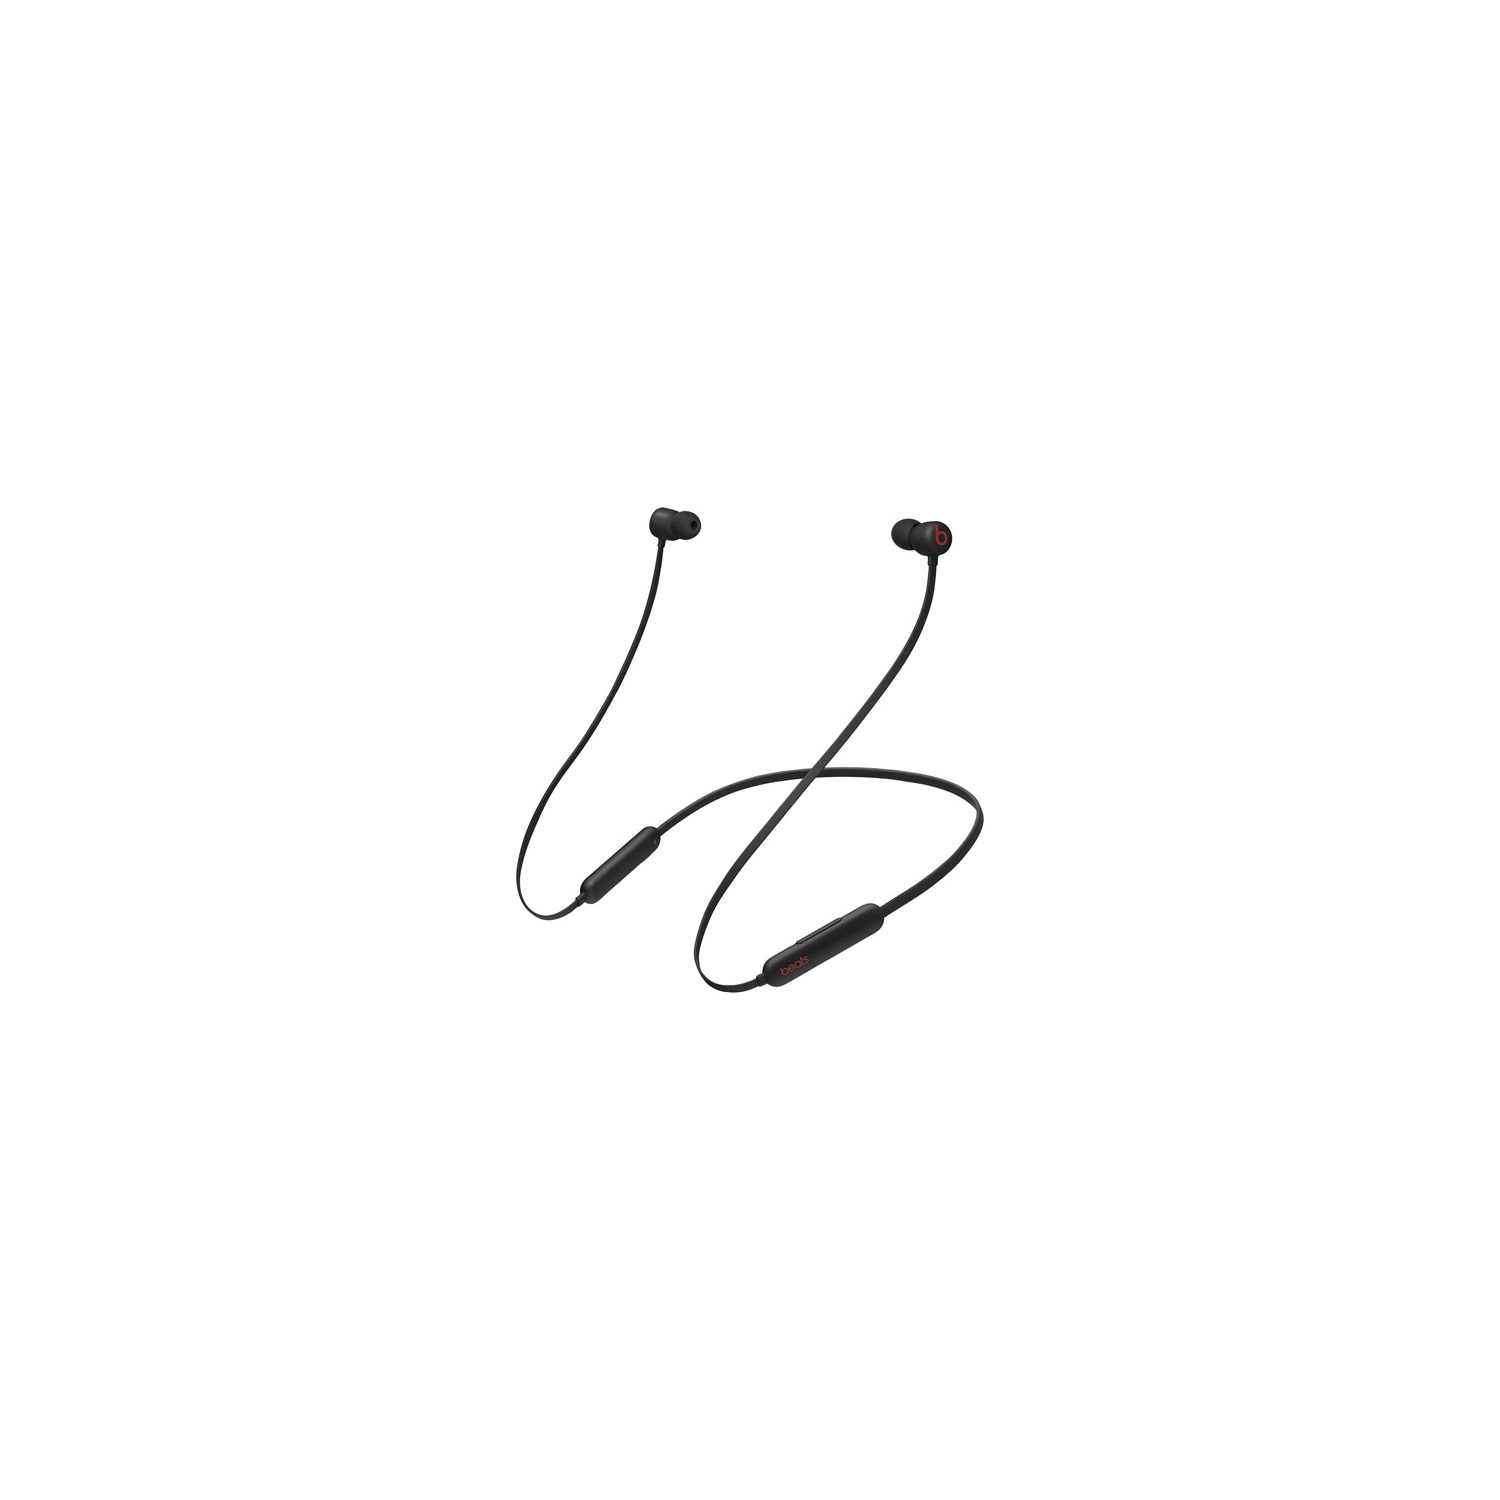 Refurbished (Excellent) - Beats By Dr. Dre Flex In-Ear Bluetooth Headphones - Beats Black